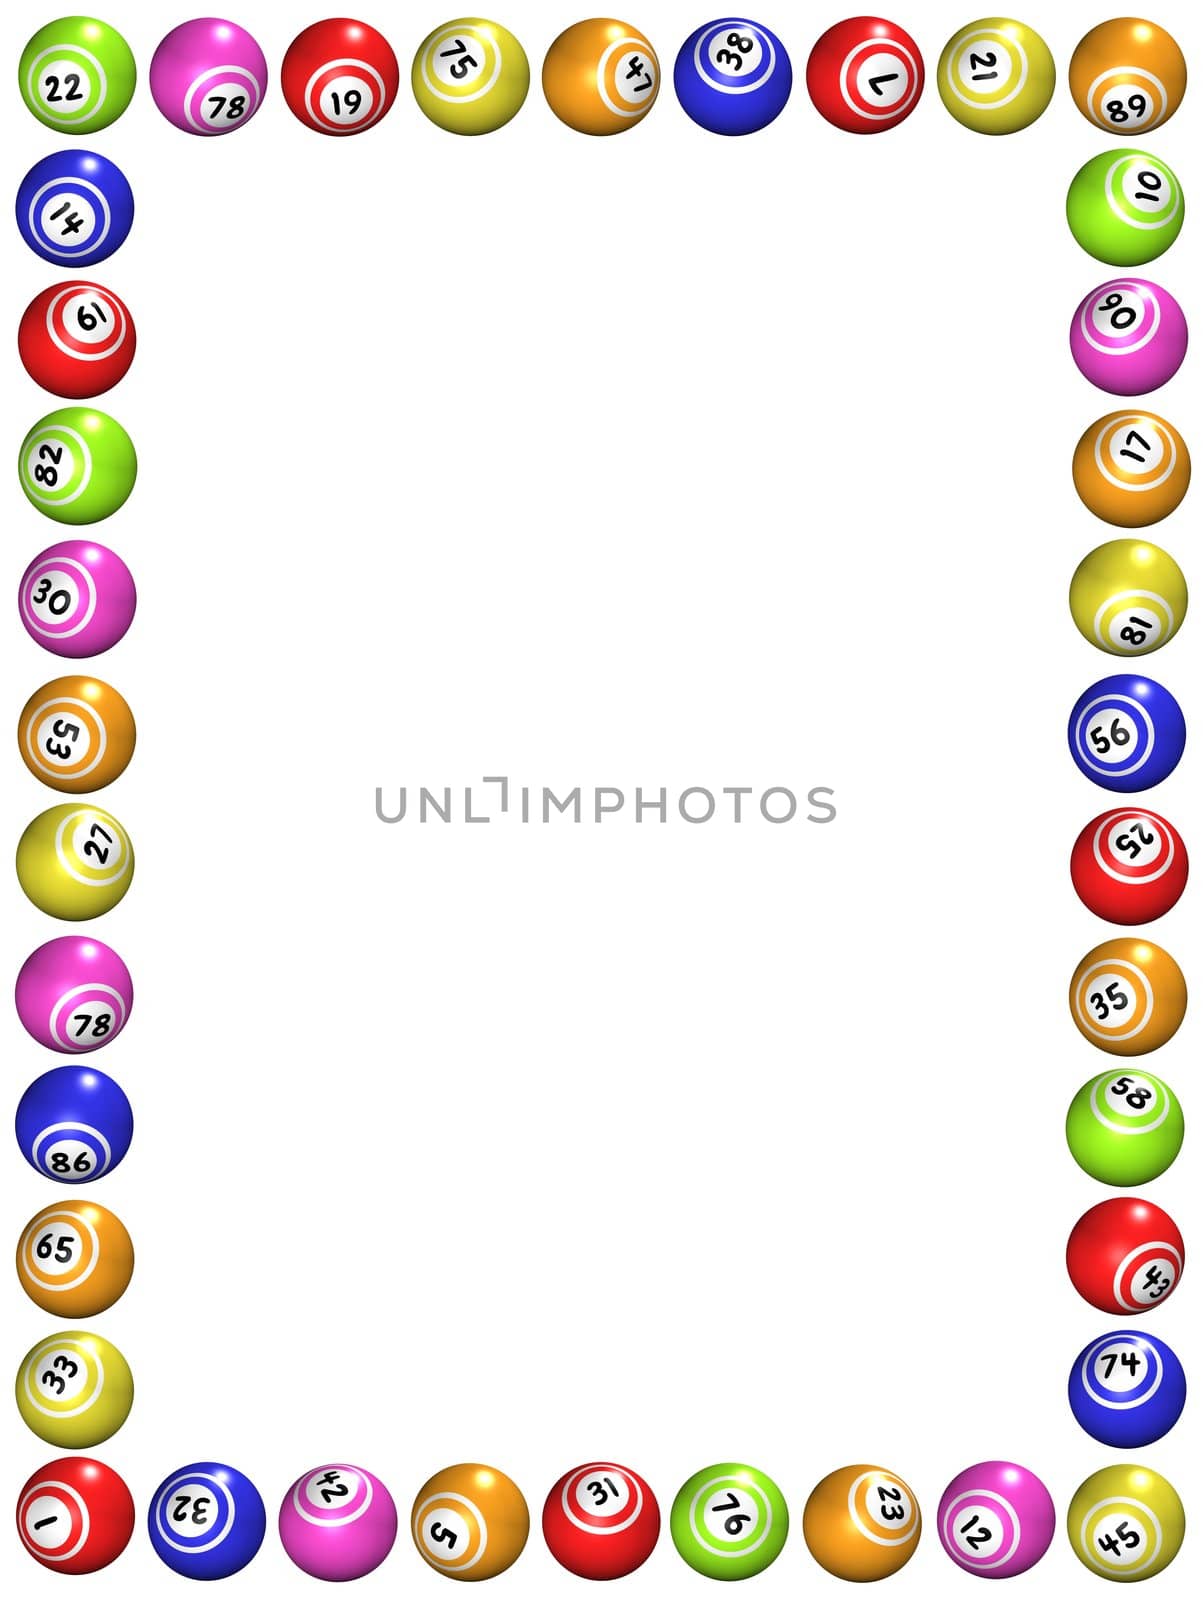 Illustrated frame made of bingo balls